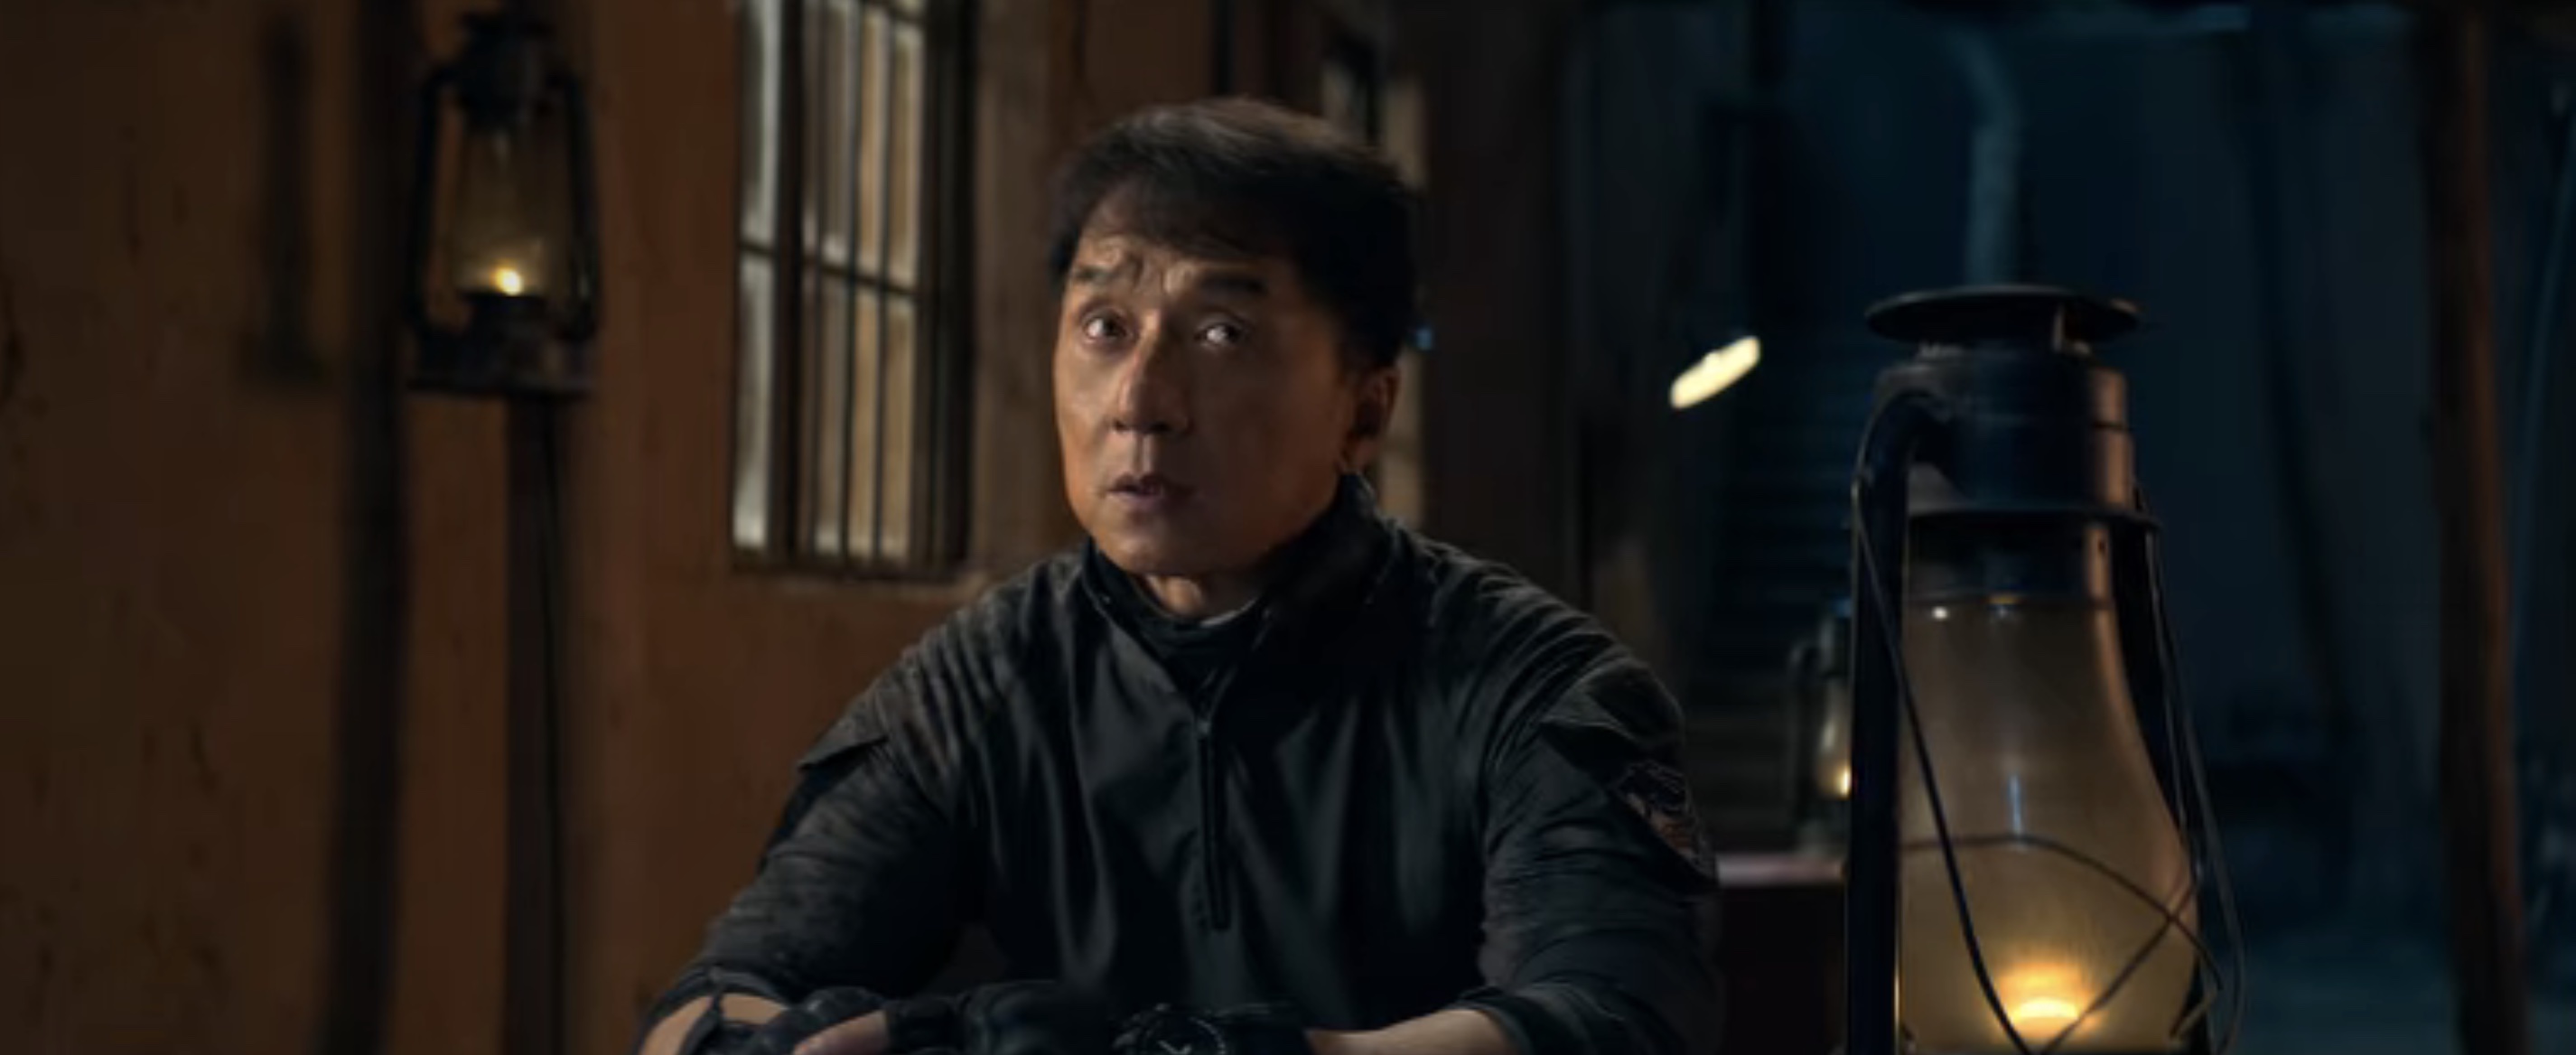 Hidden Strike Cast on Netflix - Jackie Chan as Dragon Luo